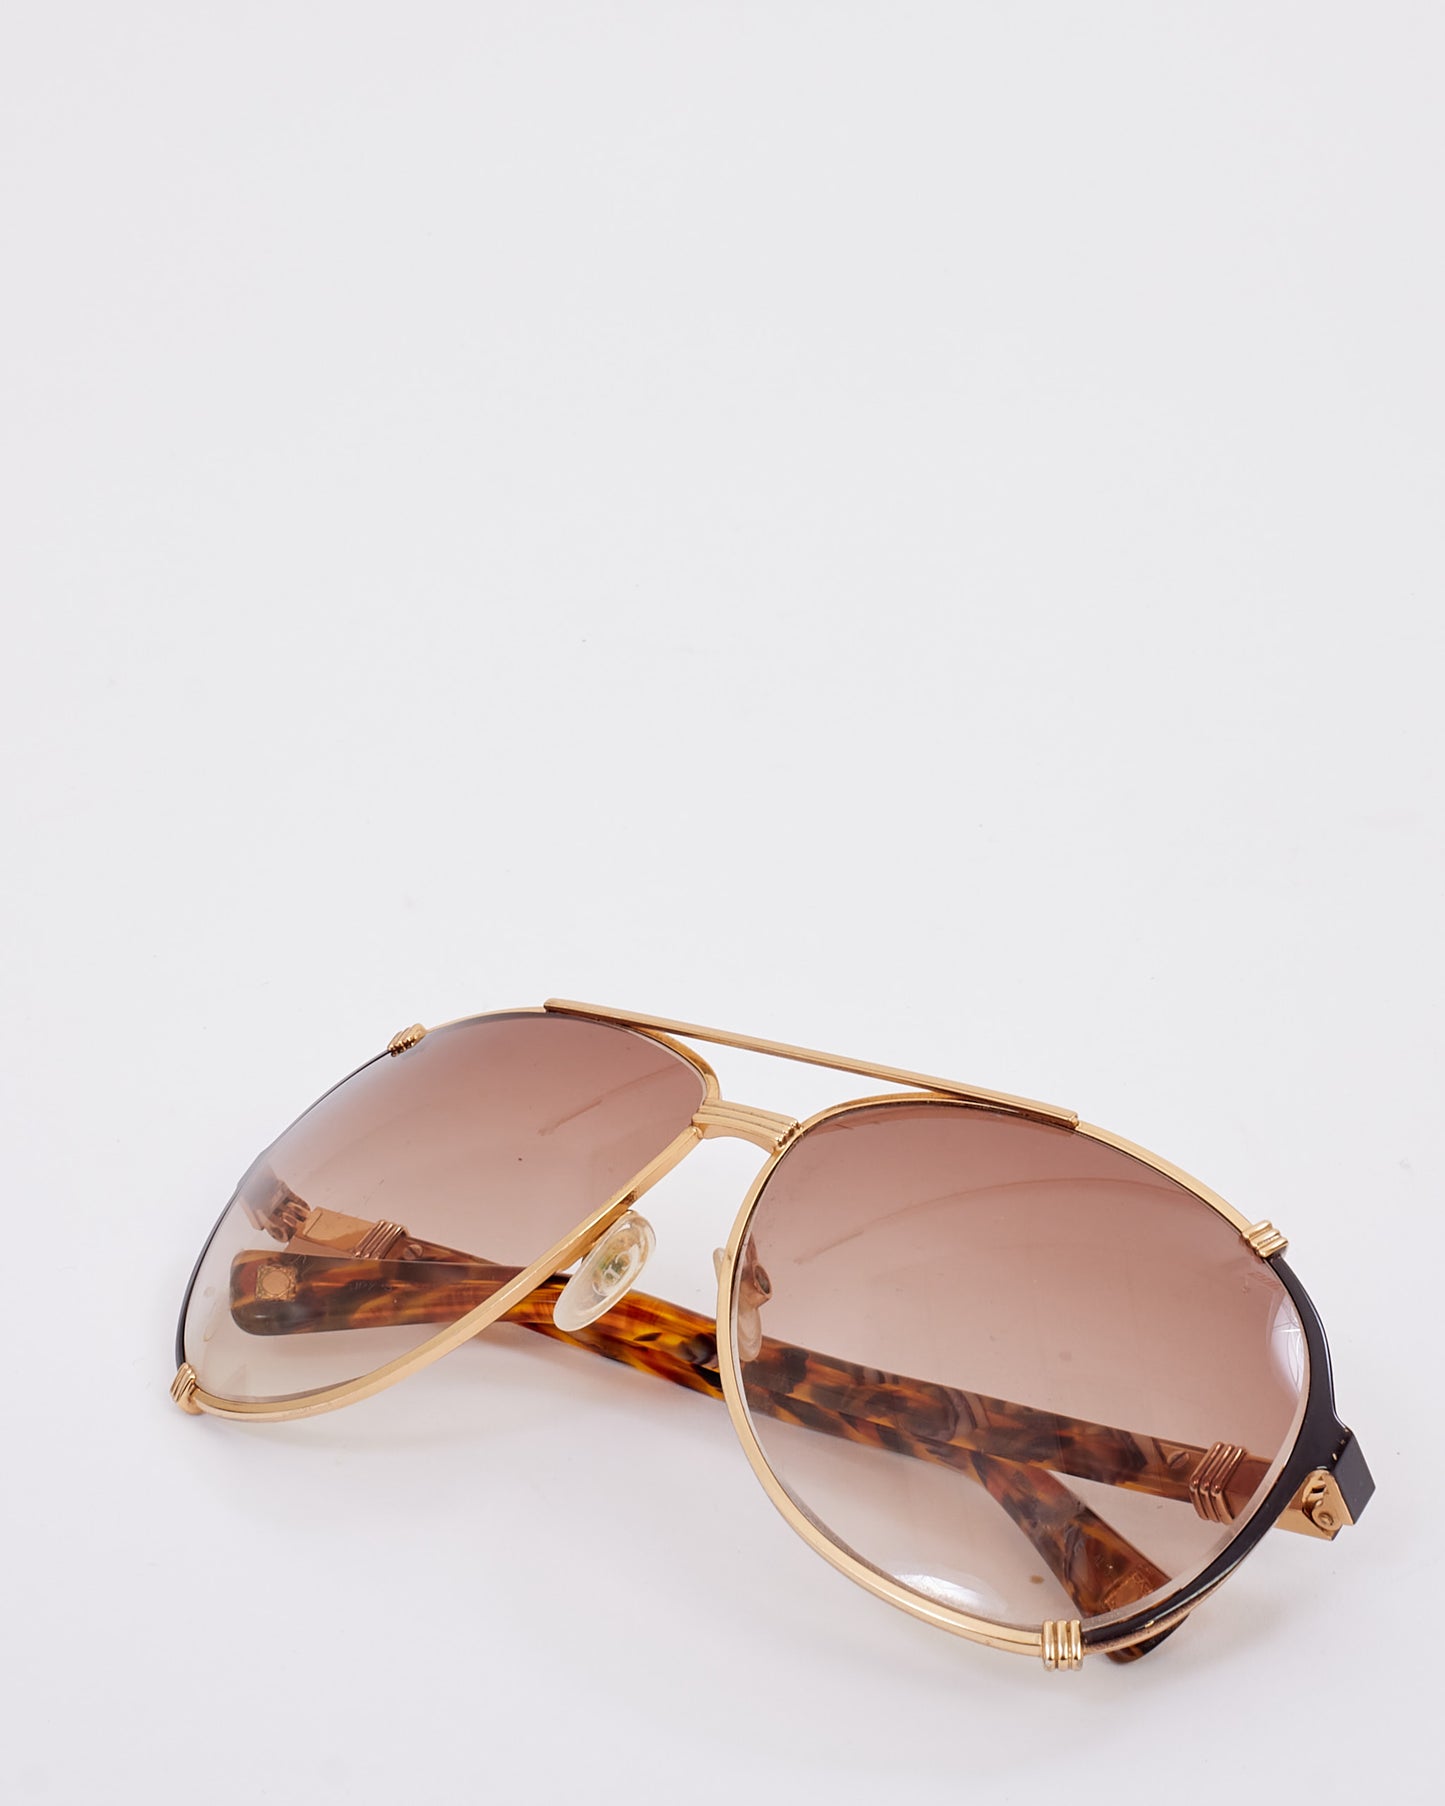 Dior Gold & Tortoise Aviator Sunglasses